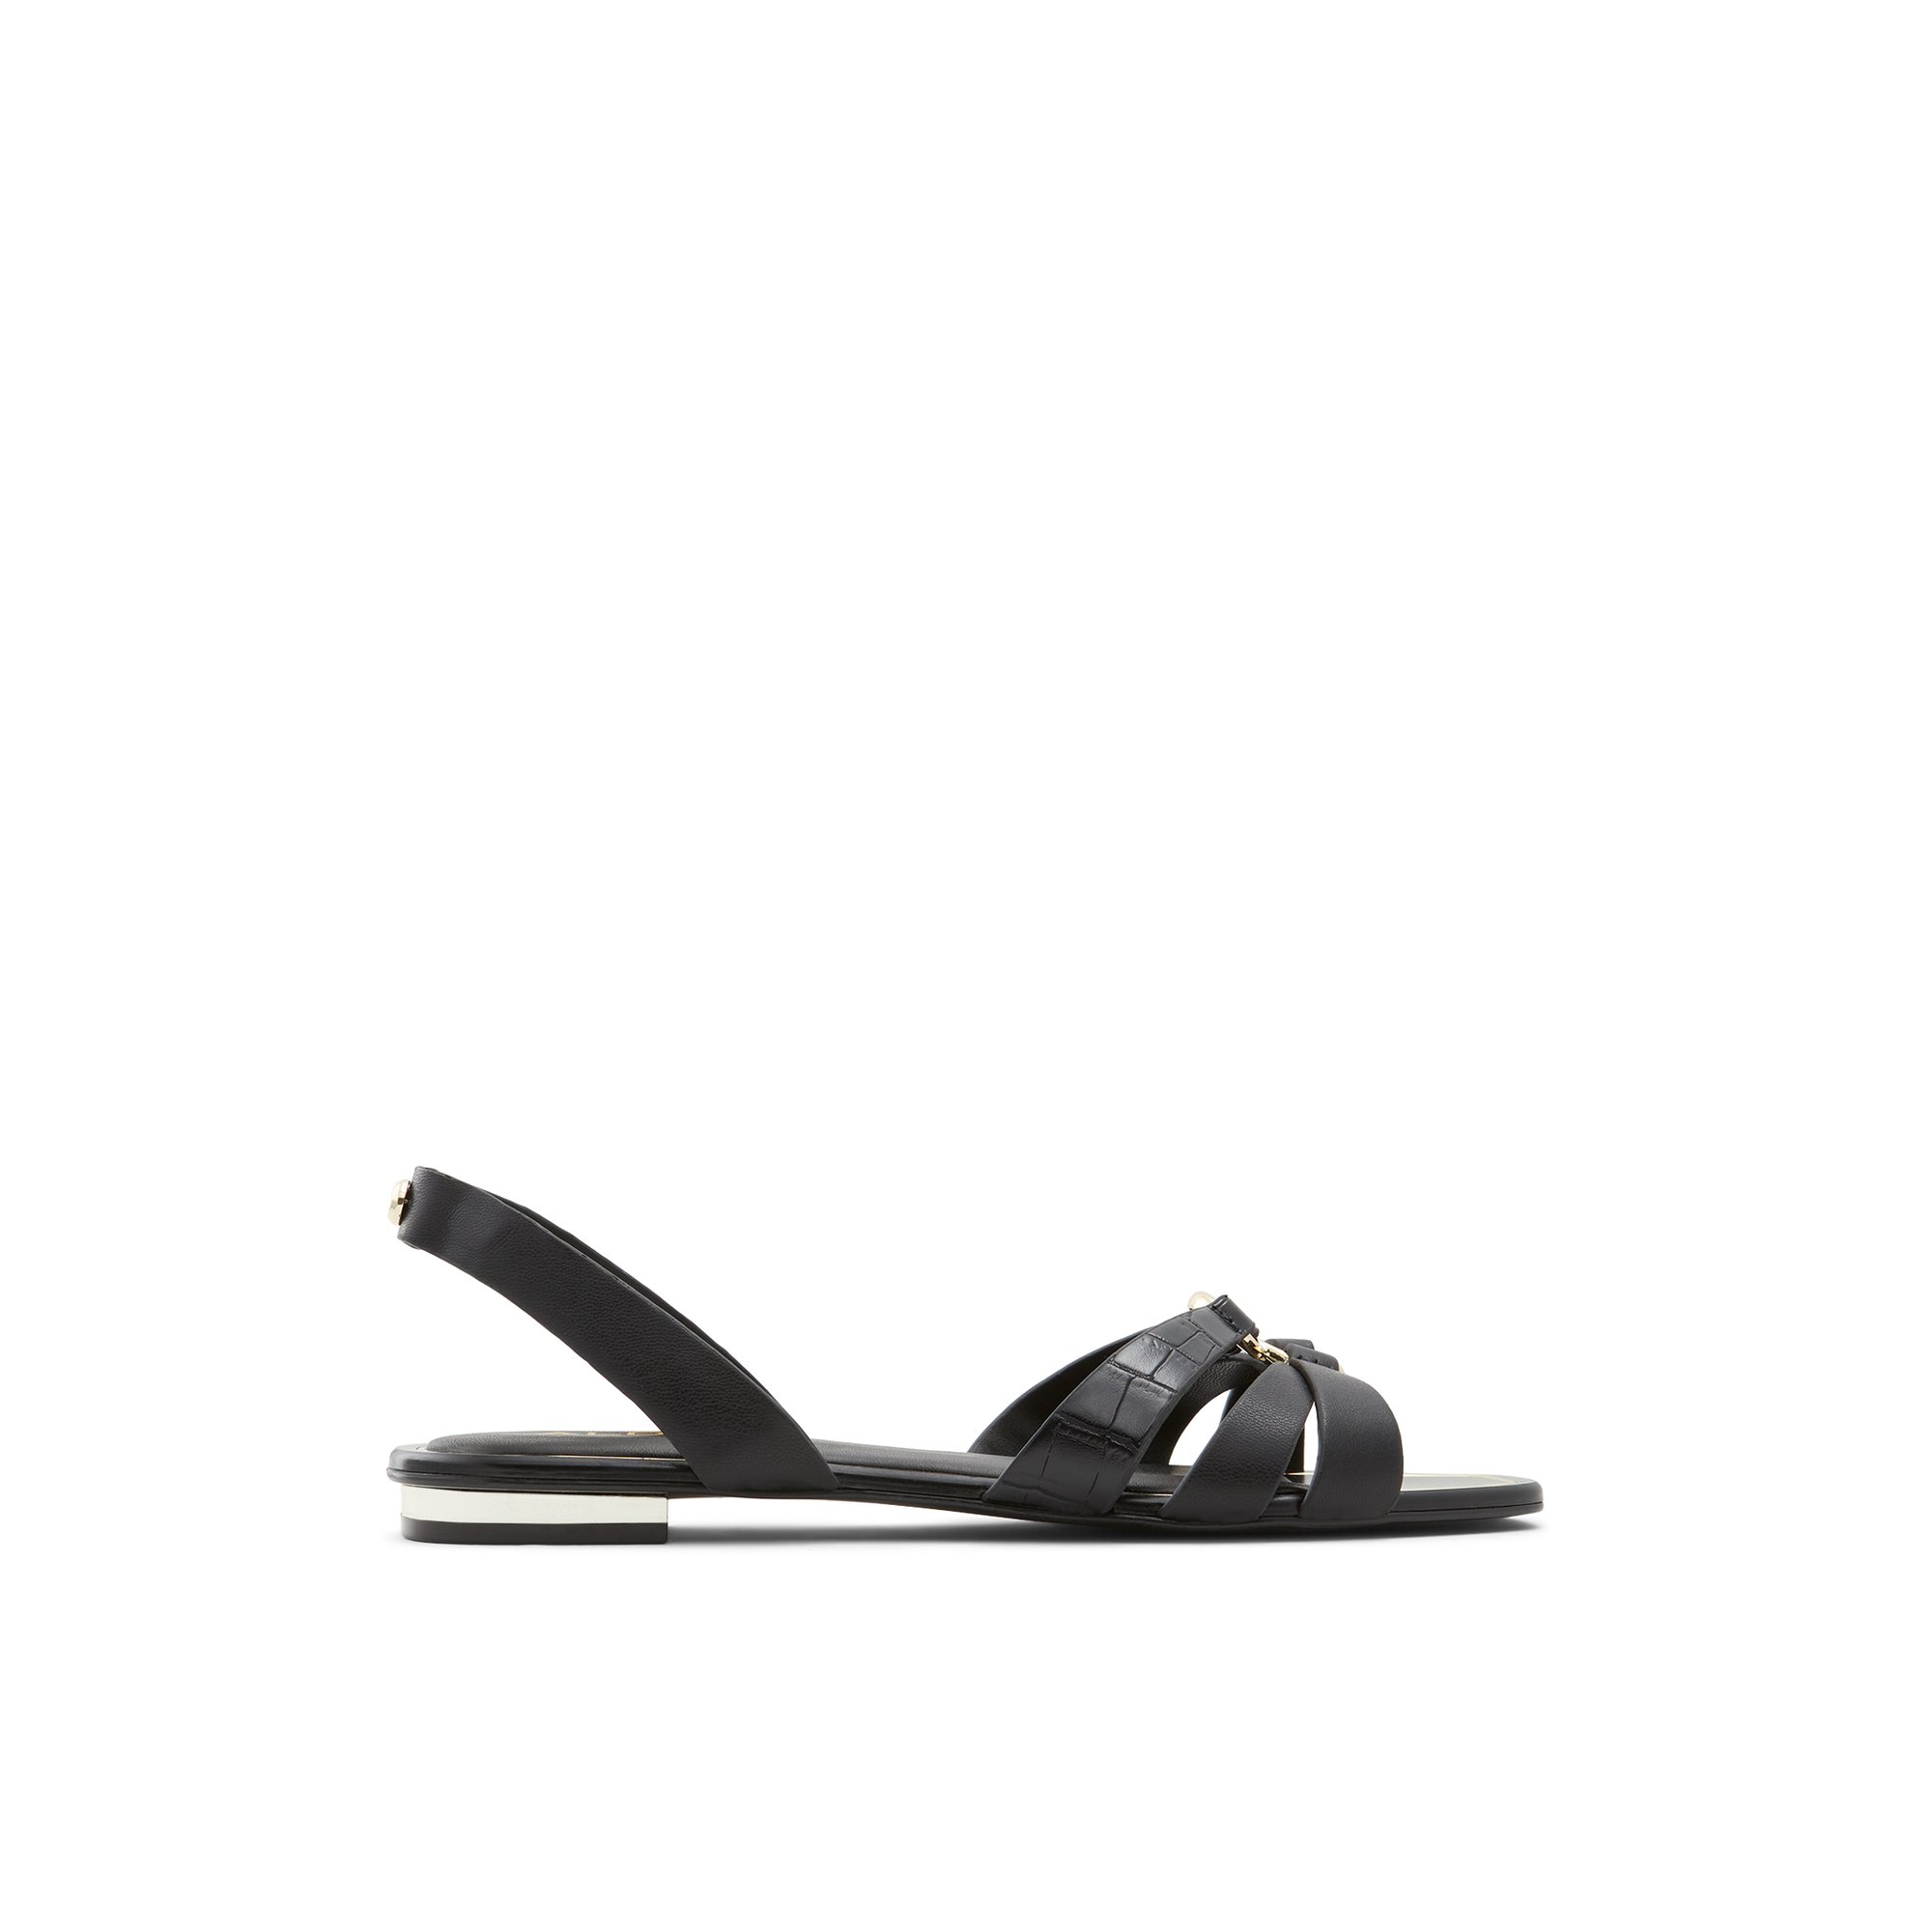 Image of ALDO Marassi - Women's Flat Sandals - Black, Size 7.5